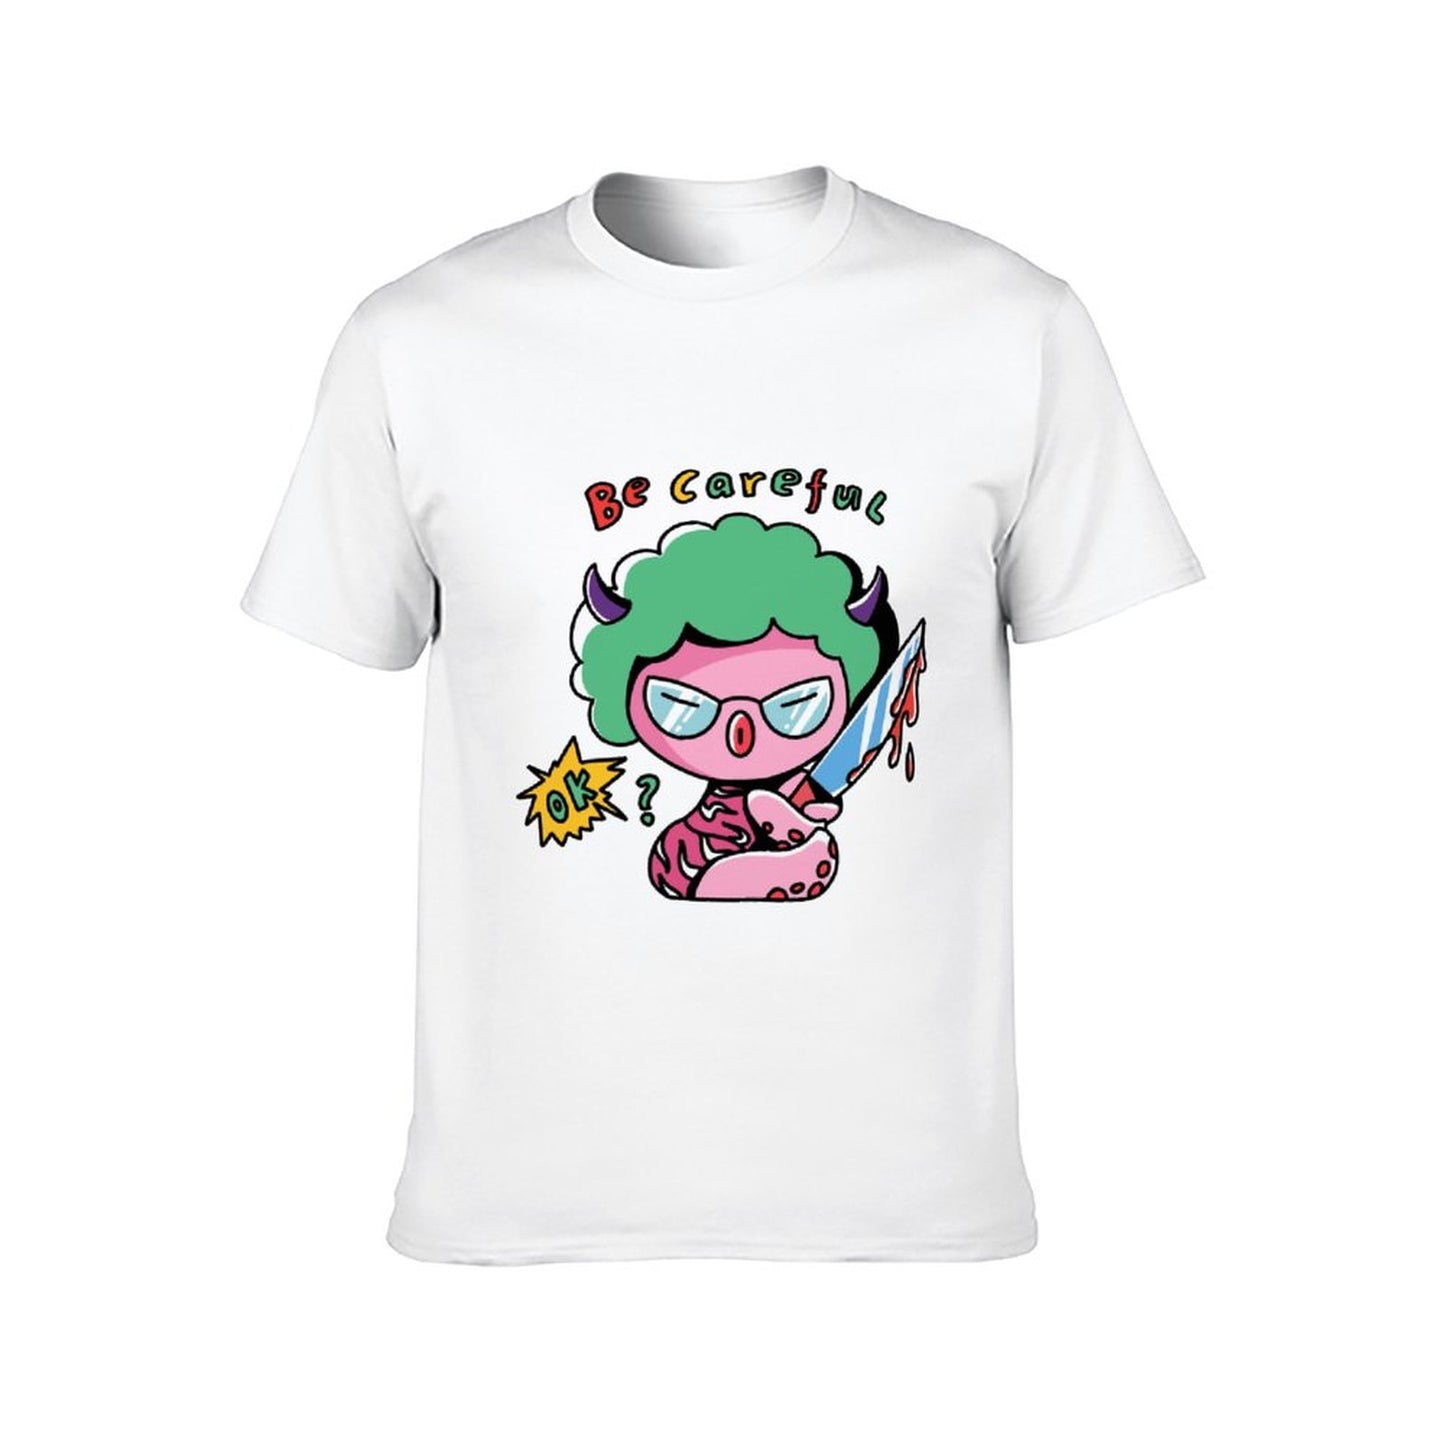 Online DIY T-shirt for Men Women Short Sleeve T-Shirt Octopus Bad Girl